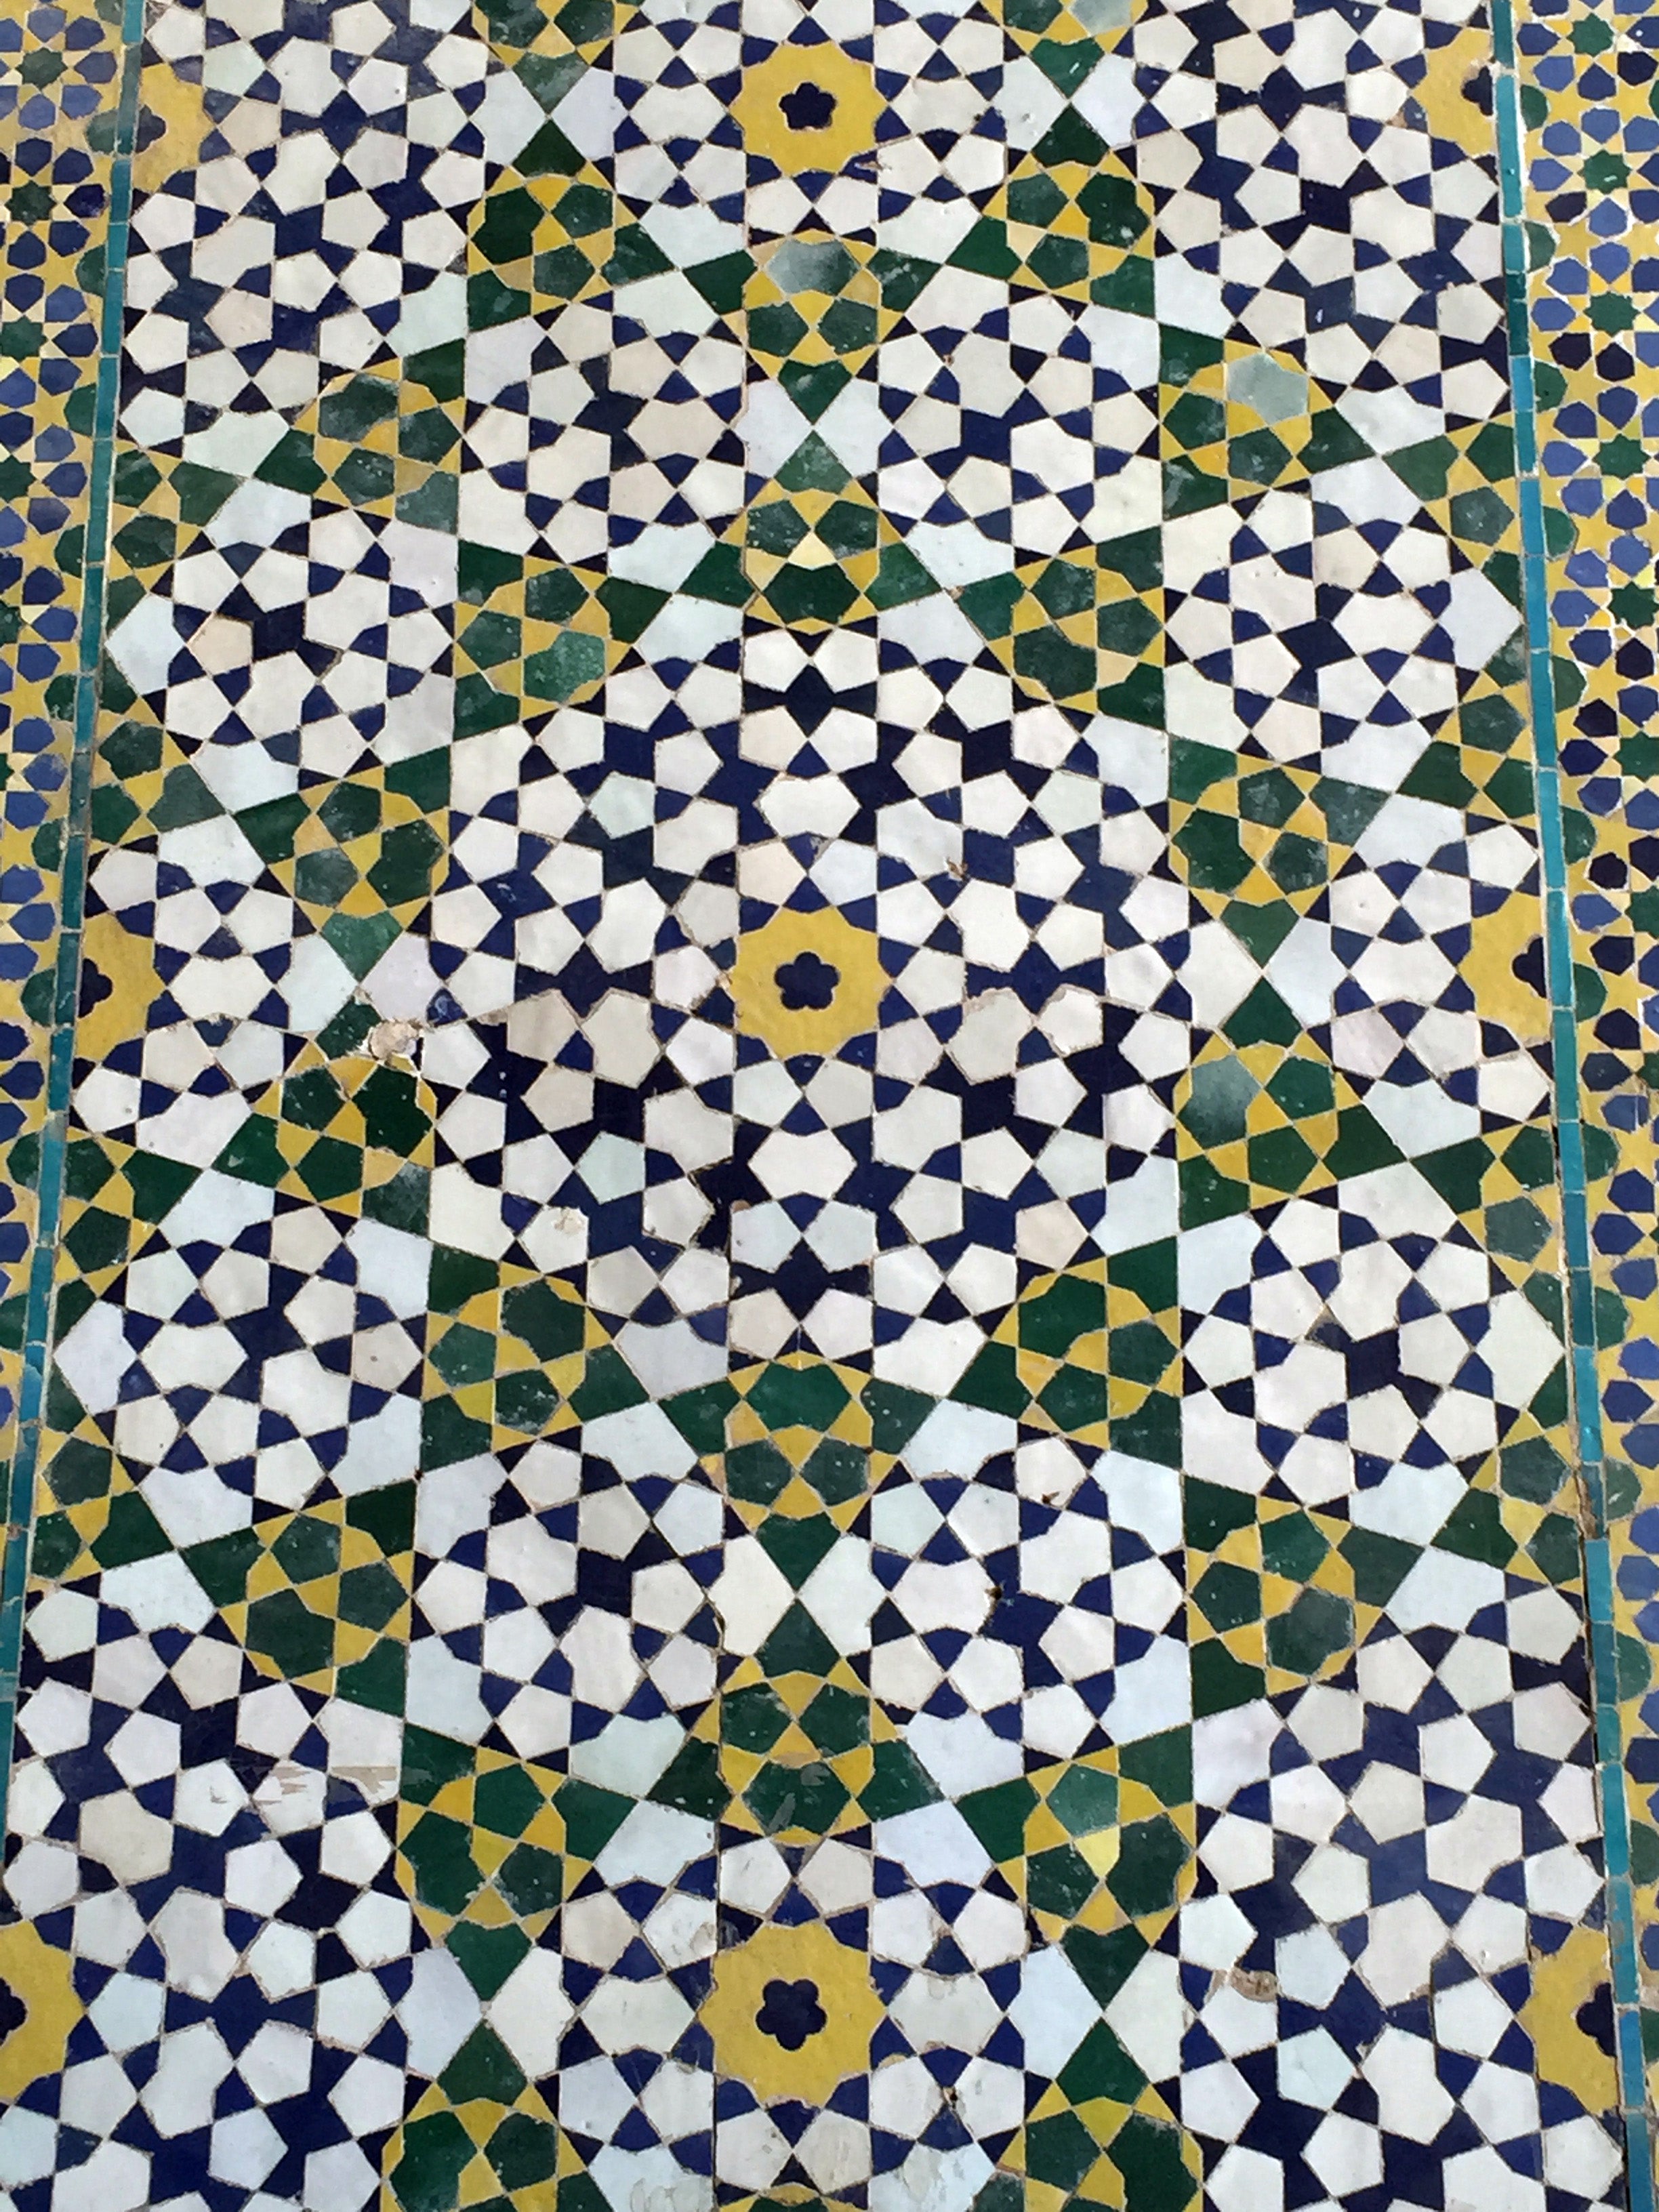 Dual Level Pattern from Shiraz